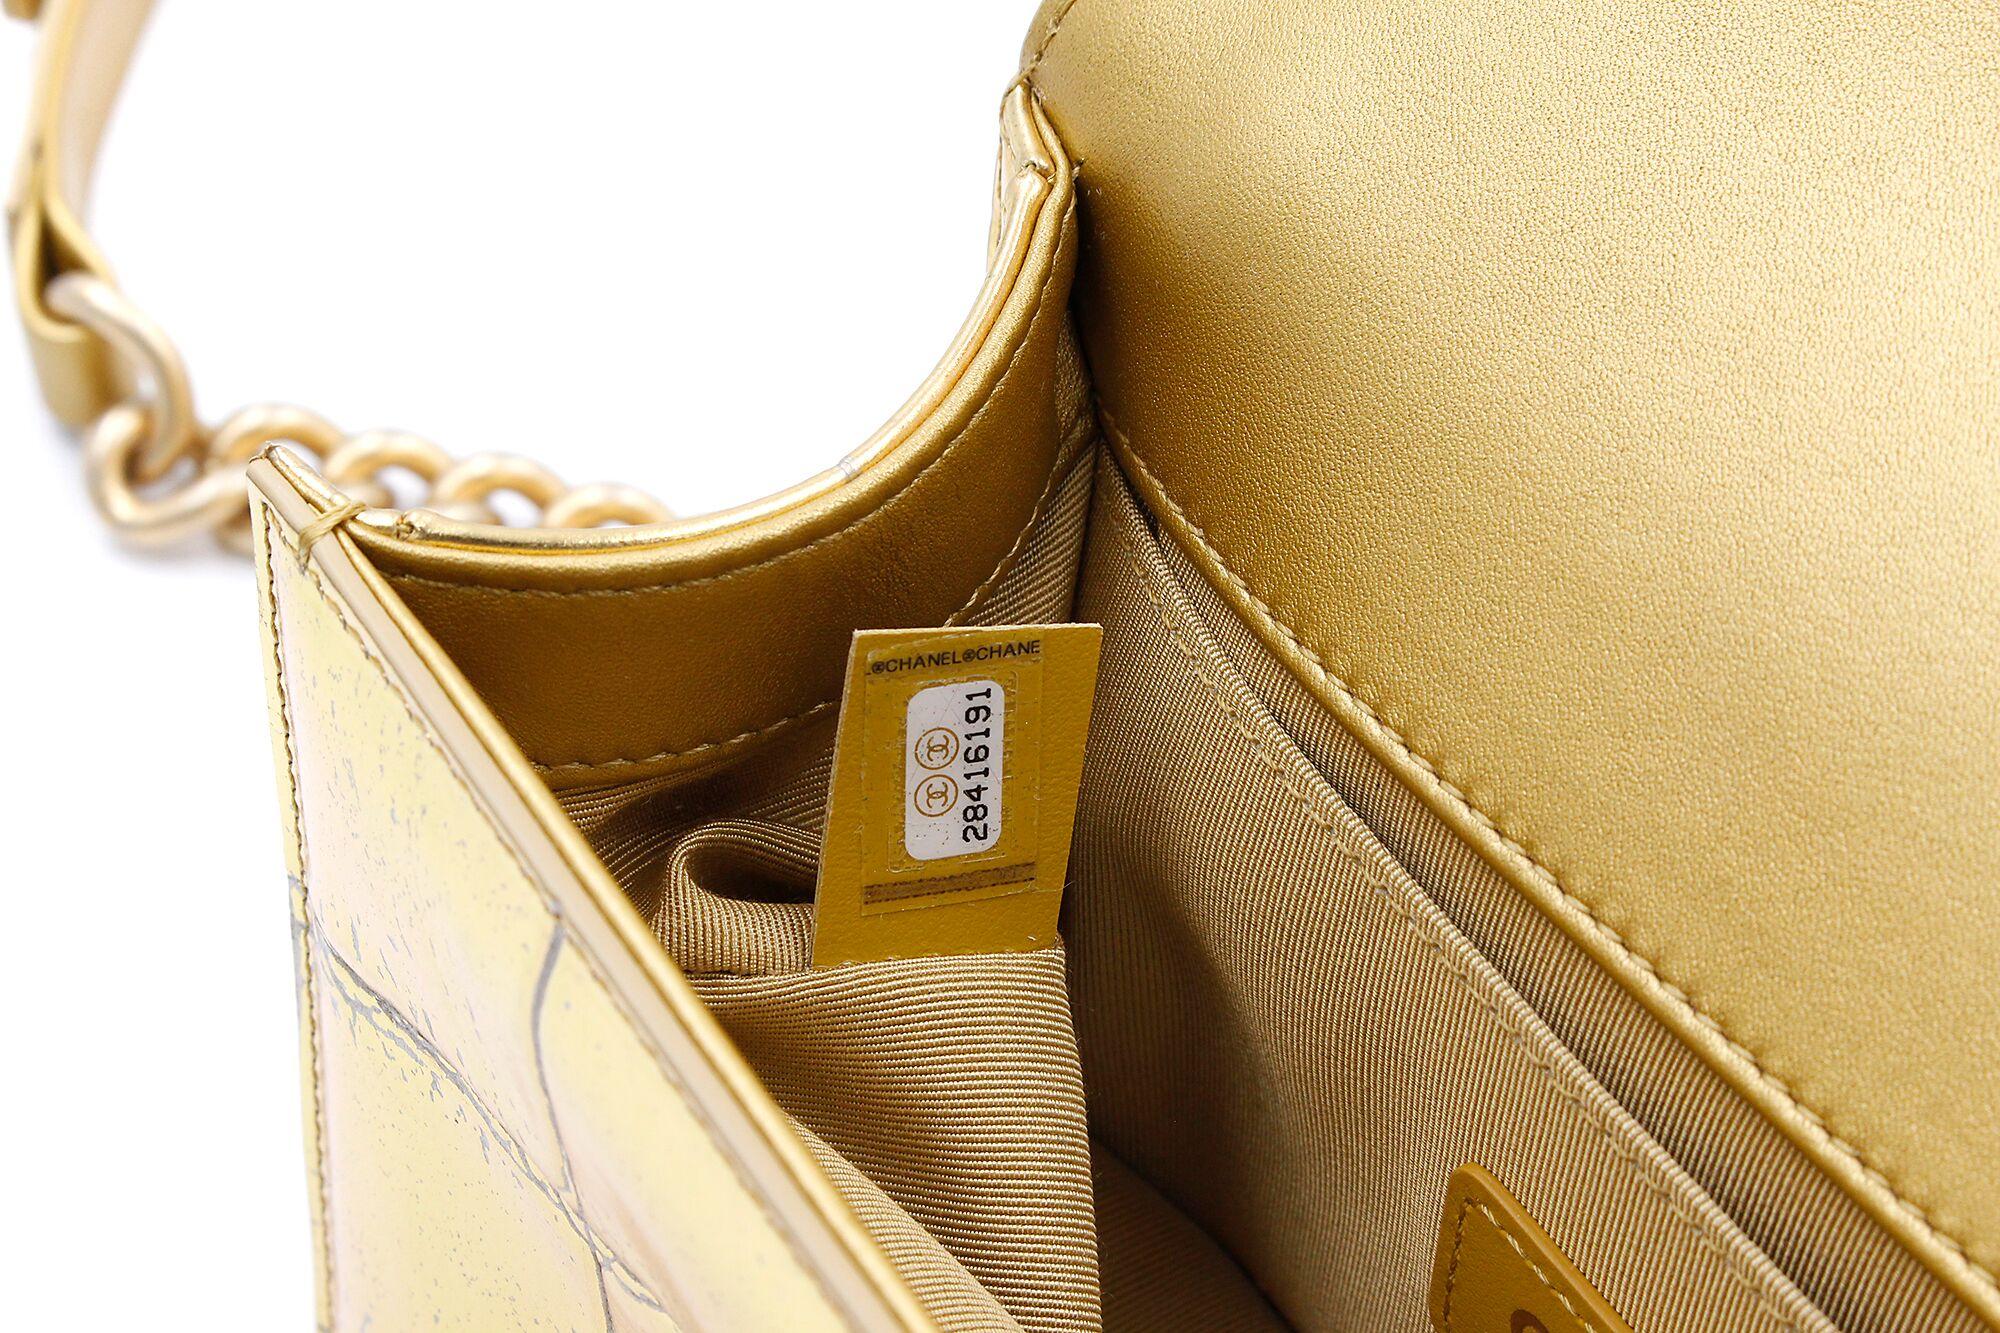 Chanel Small Crocodile Embossed Printed Gold Leather Boy Handbag A67085 3